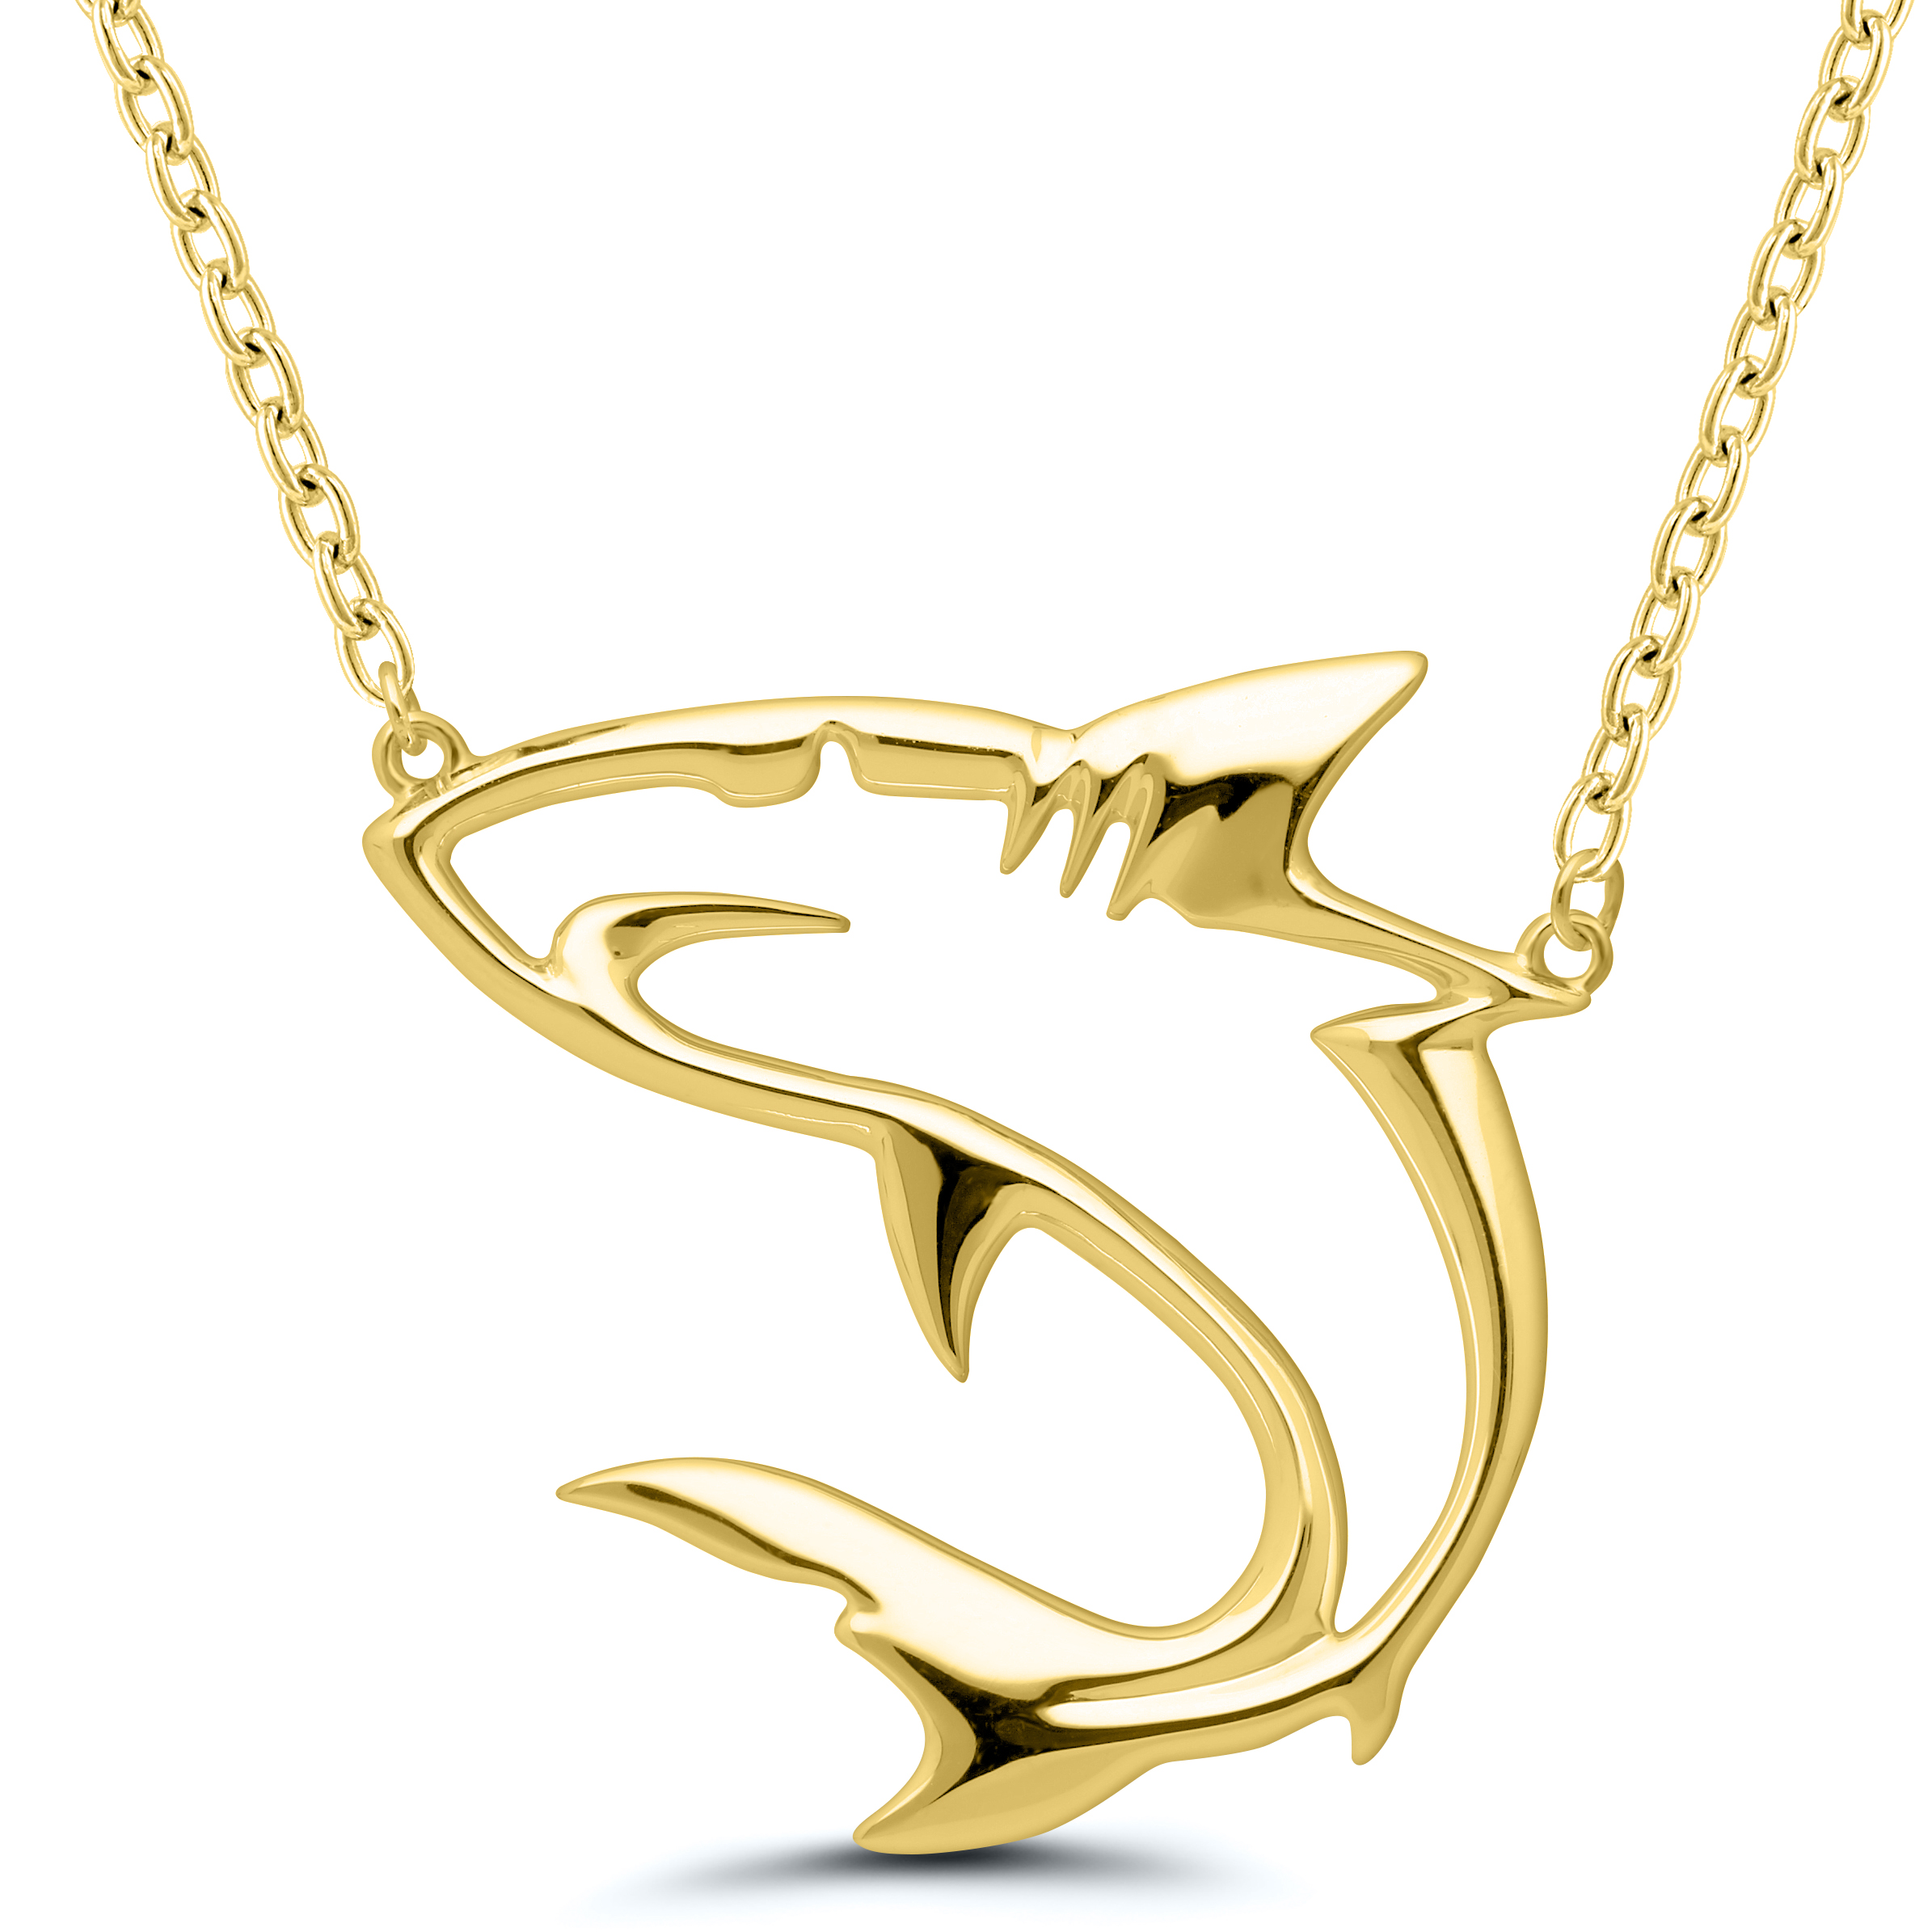 Tekashi 6ix9ine's Iced Out Shark Pendant Necklace (Small Size) | Shark  pendant, Mens necklace pendant, Urban jewelry